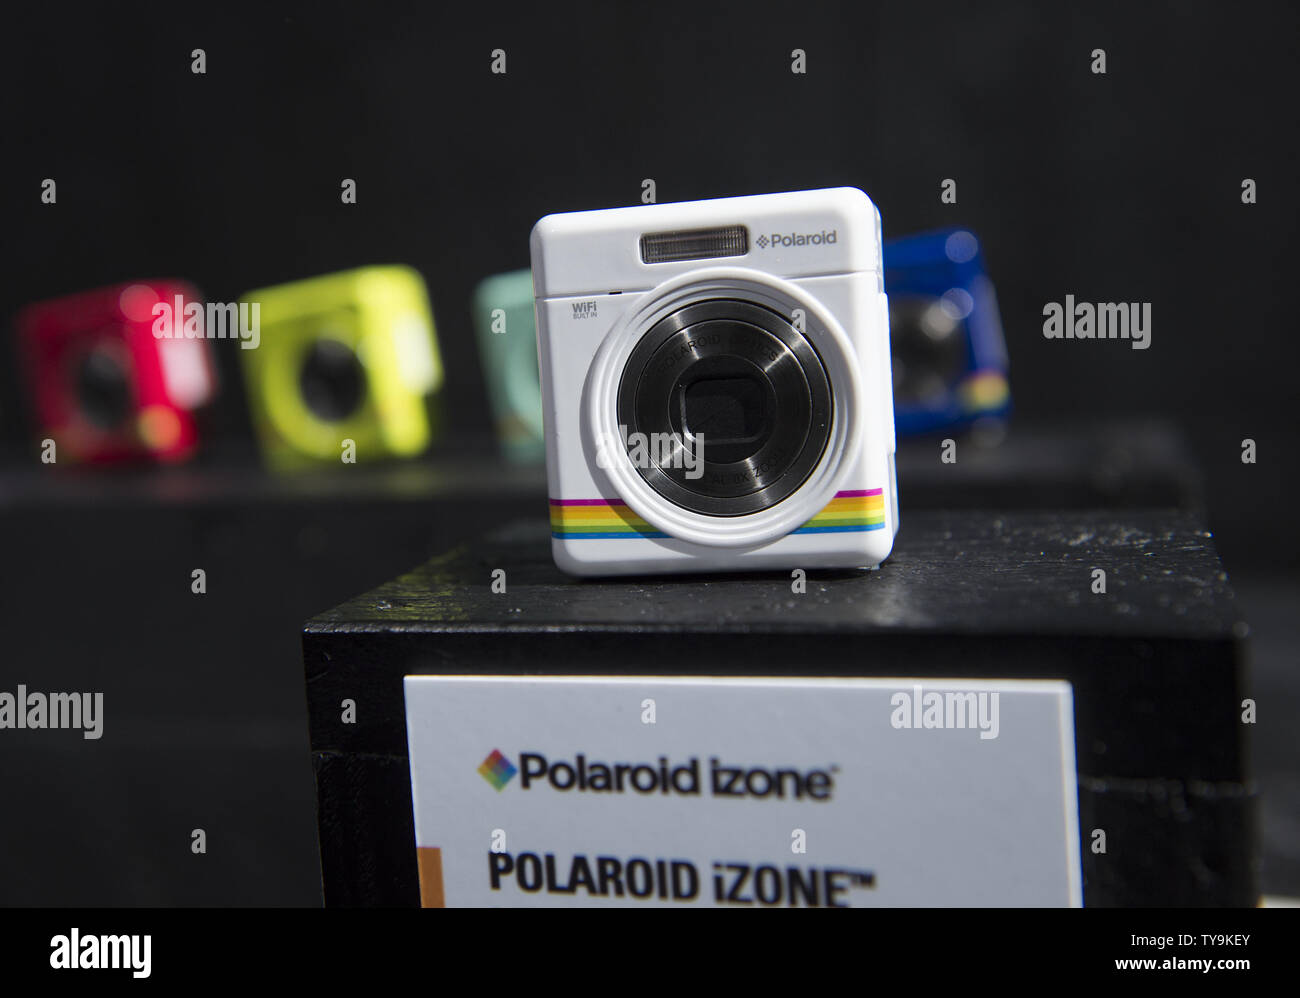 The Polaroid izone mini wifi digital camera is displayed at the 2016  International CES, a trade